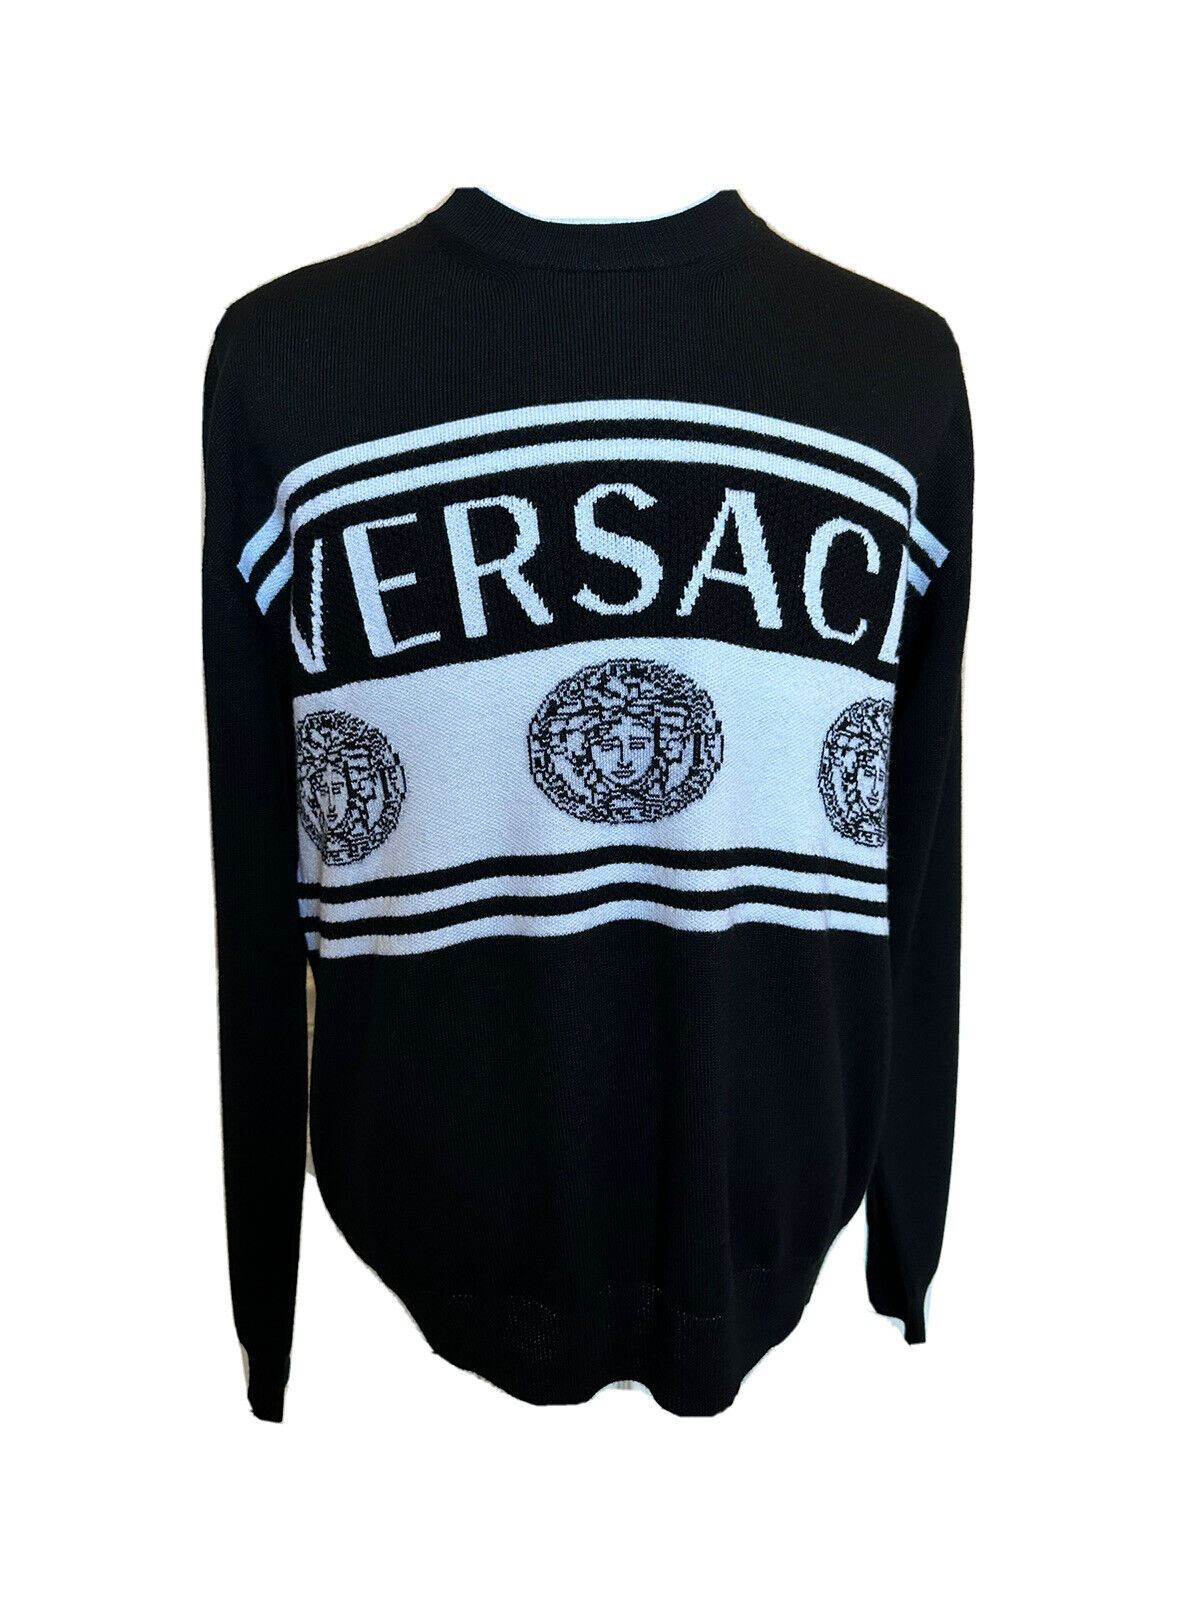 NWT $950 Versace Medusa Logo Wool Knit Sweater Black 52 (XL) Italy 1002719